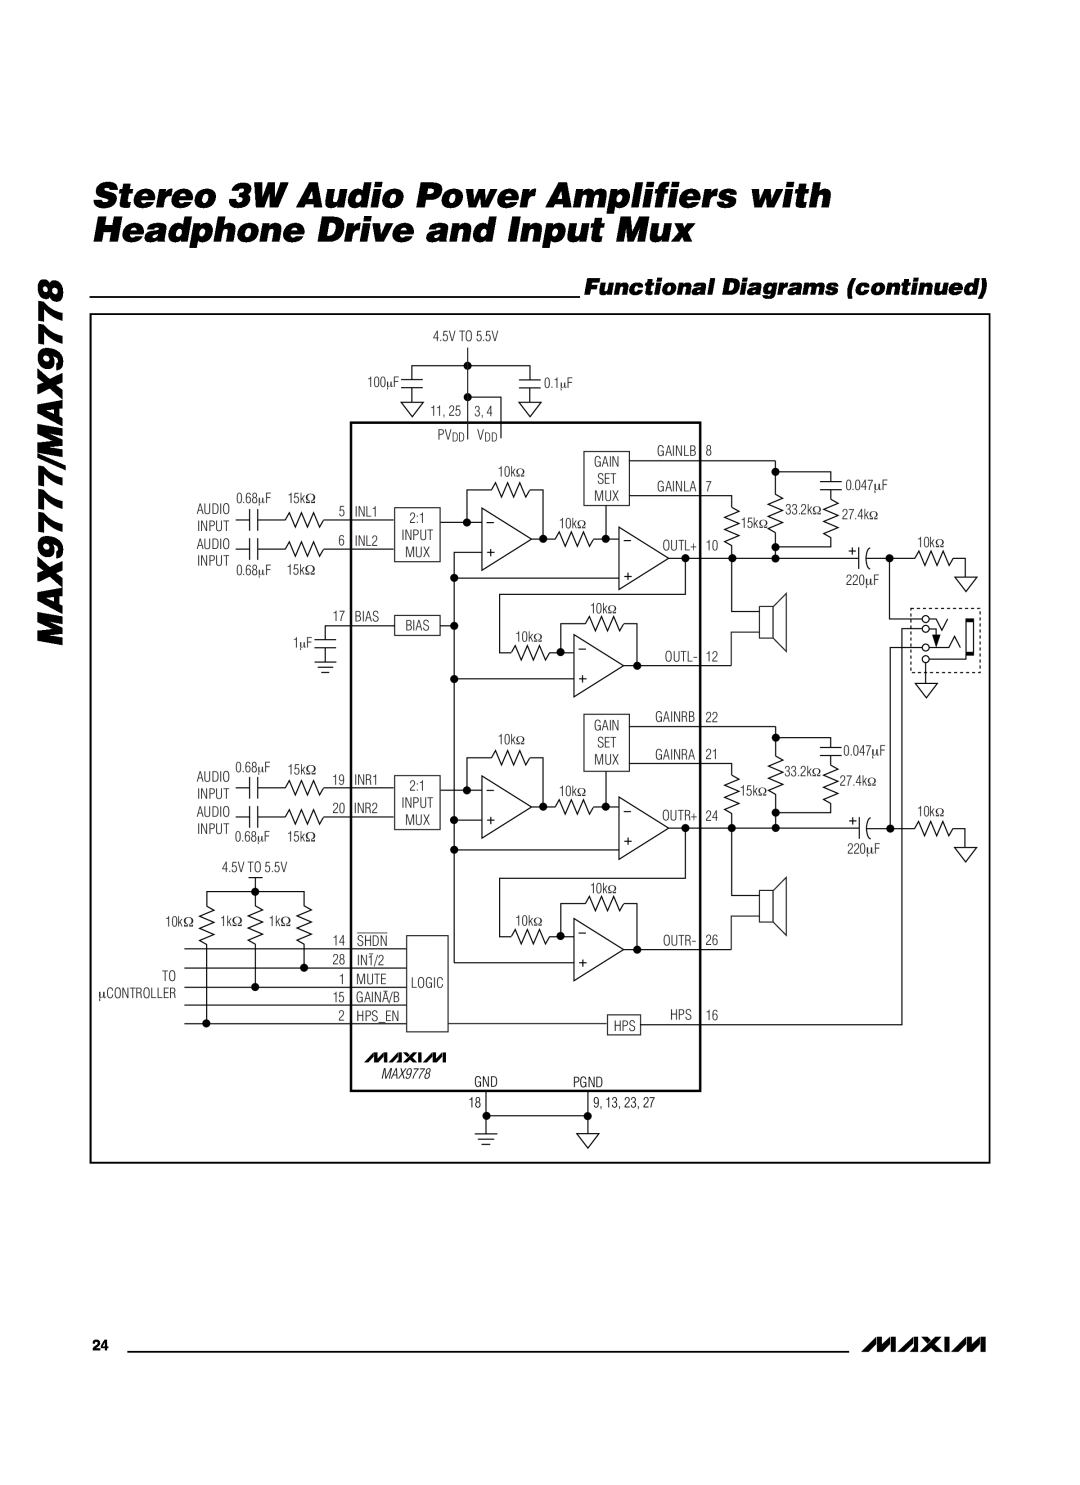 Maxim manual Functional Diagrams continued, MAX9777/MAX9778 